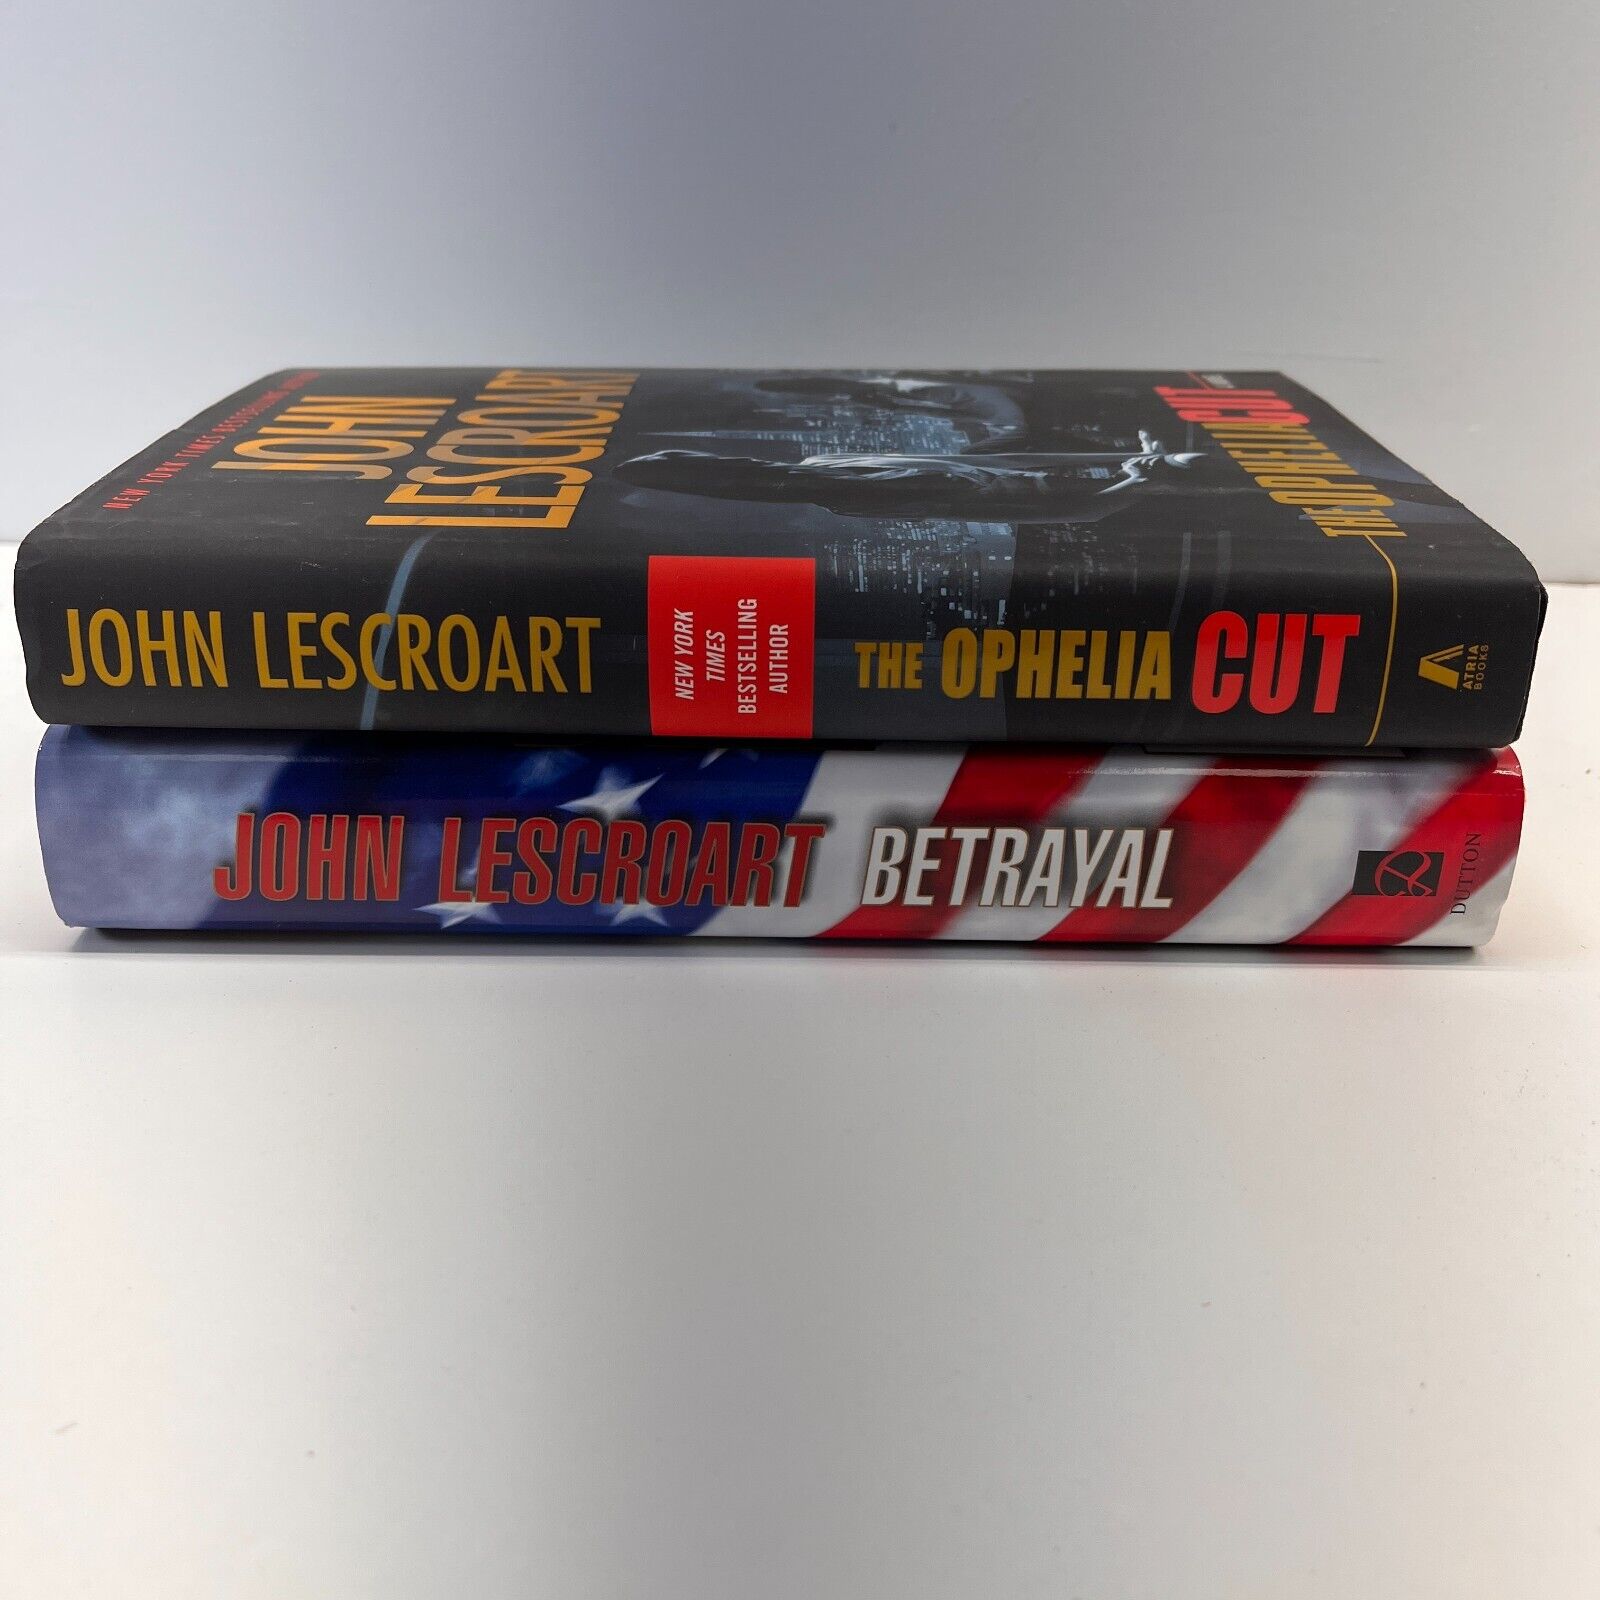 Lot 2 John Lescroart Books Betrayal & The Ophelia Cut Hardcover Dust Jackets